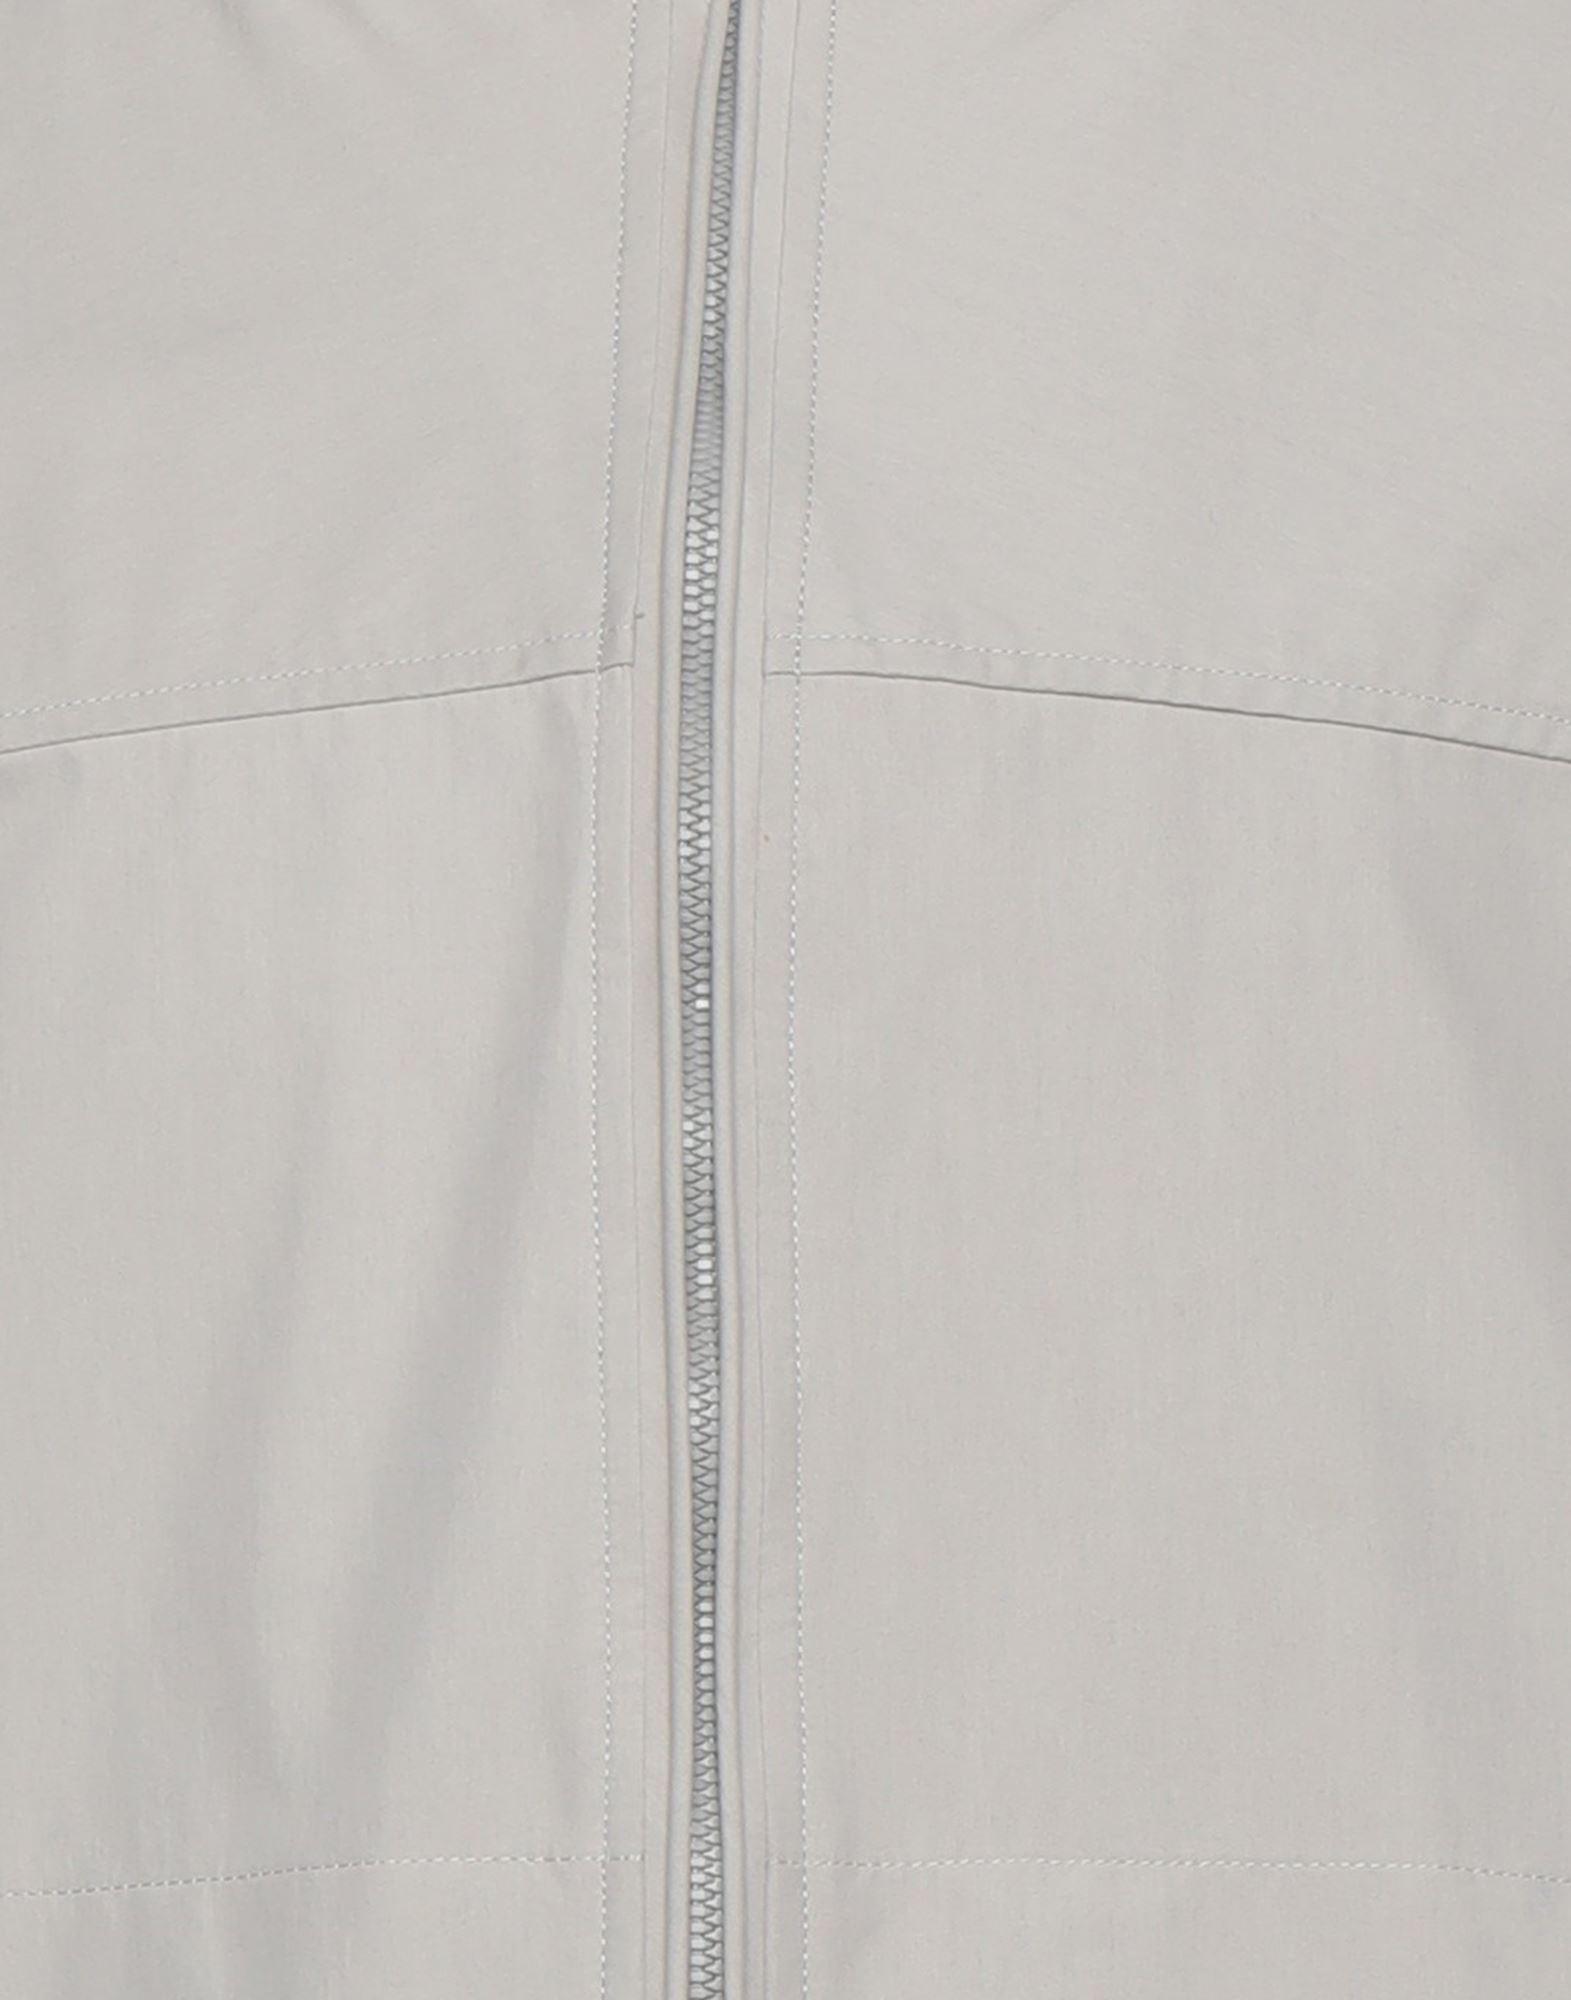 Antony Morato Synthetic Jacket in Light Grey (Gray) for Men - Lyst